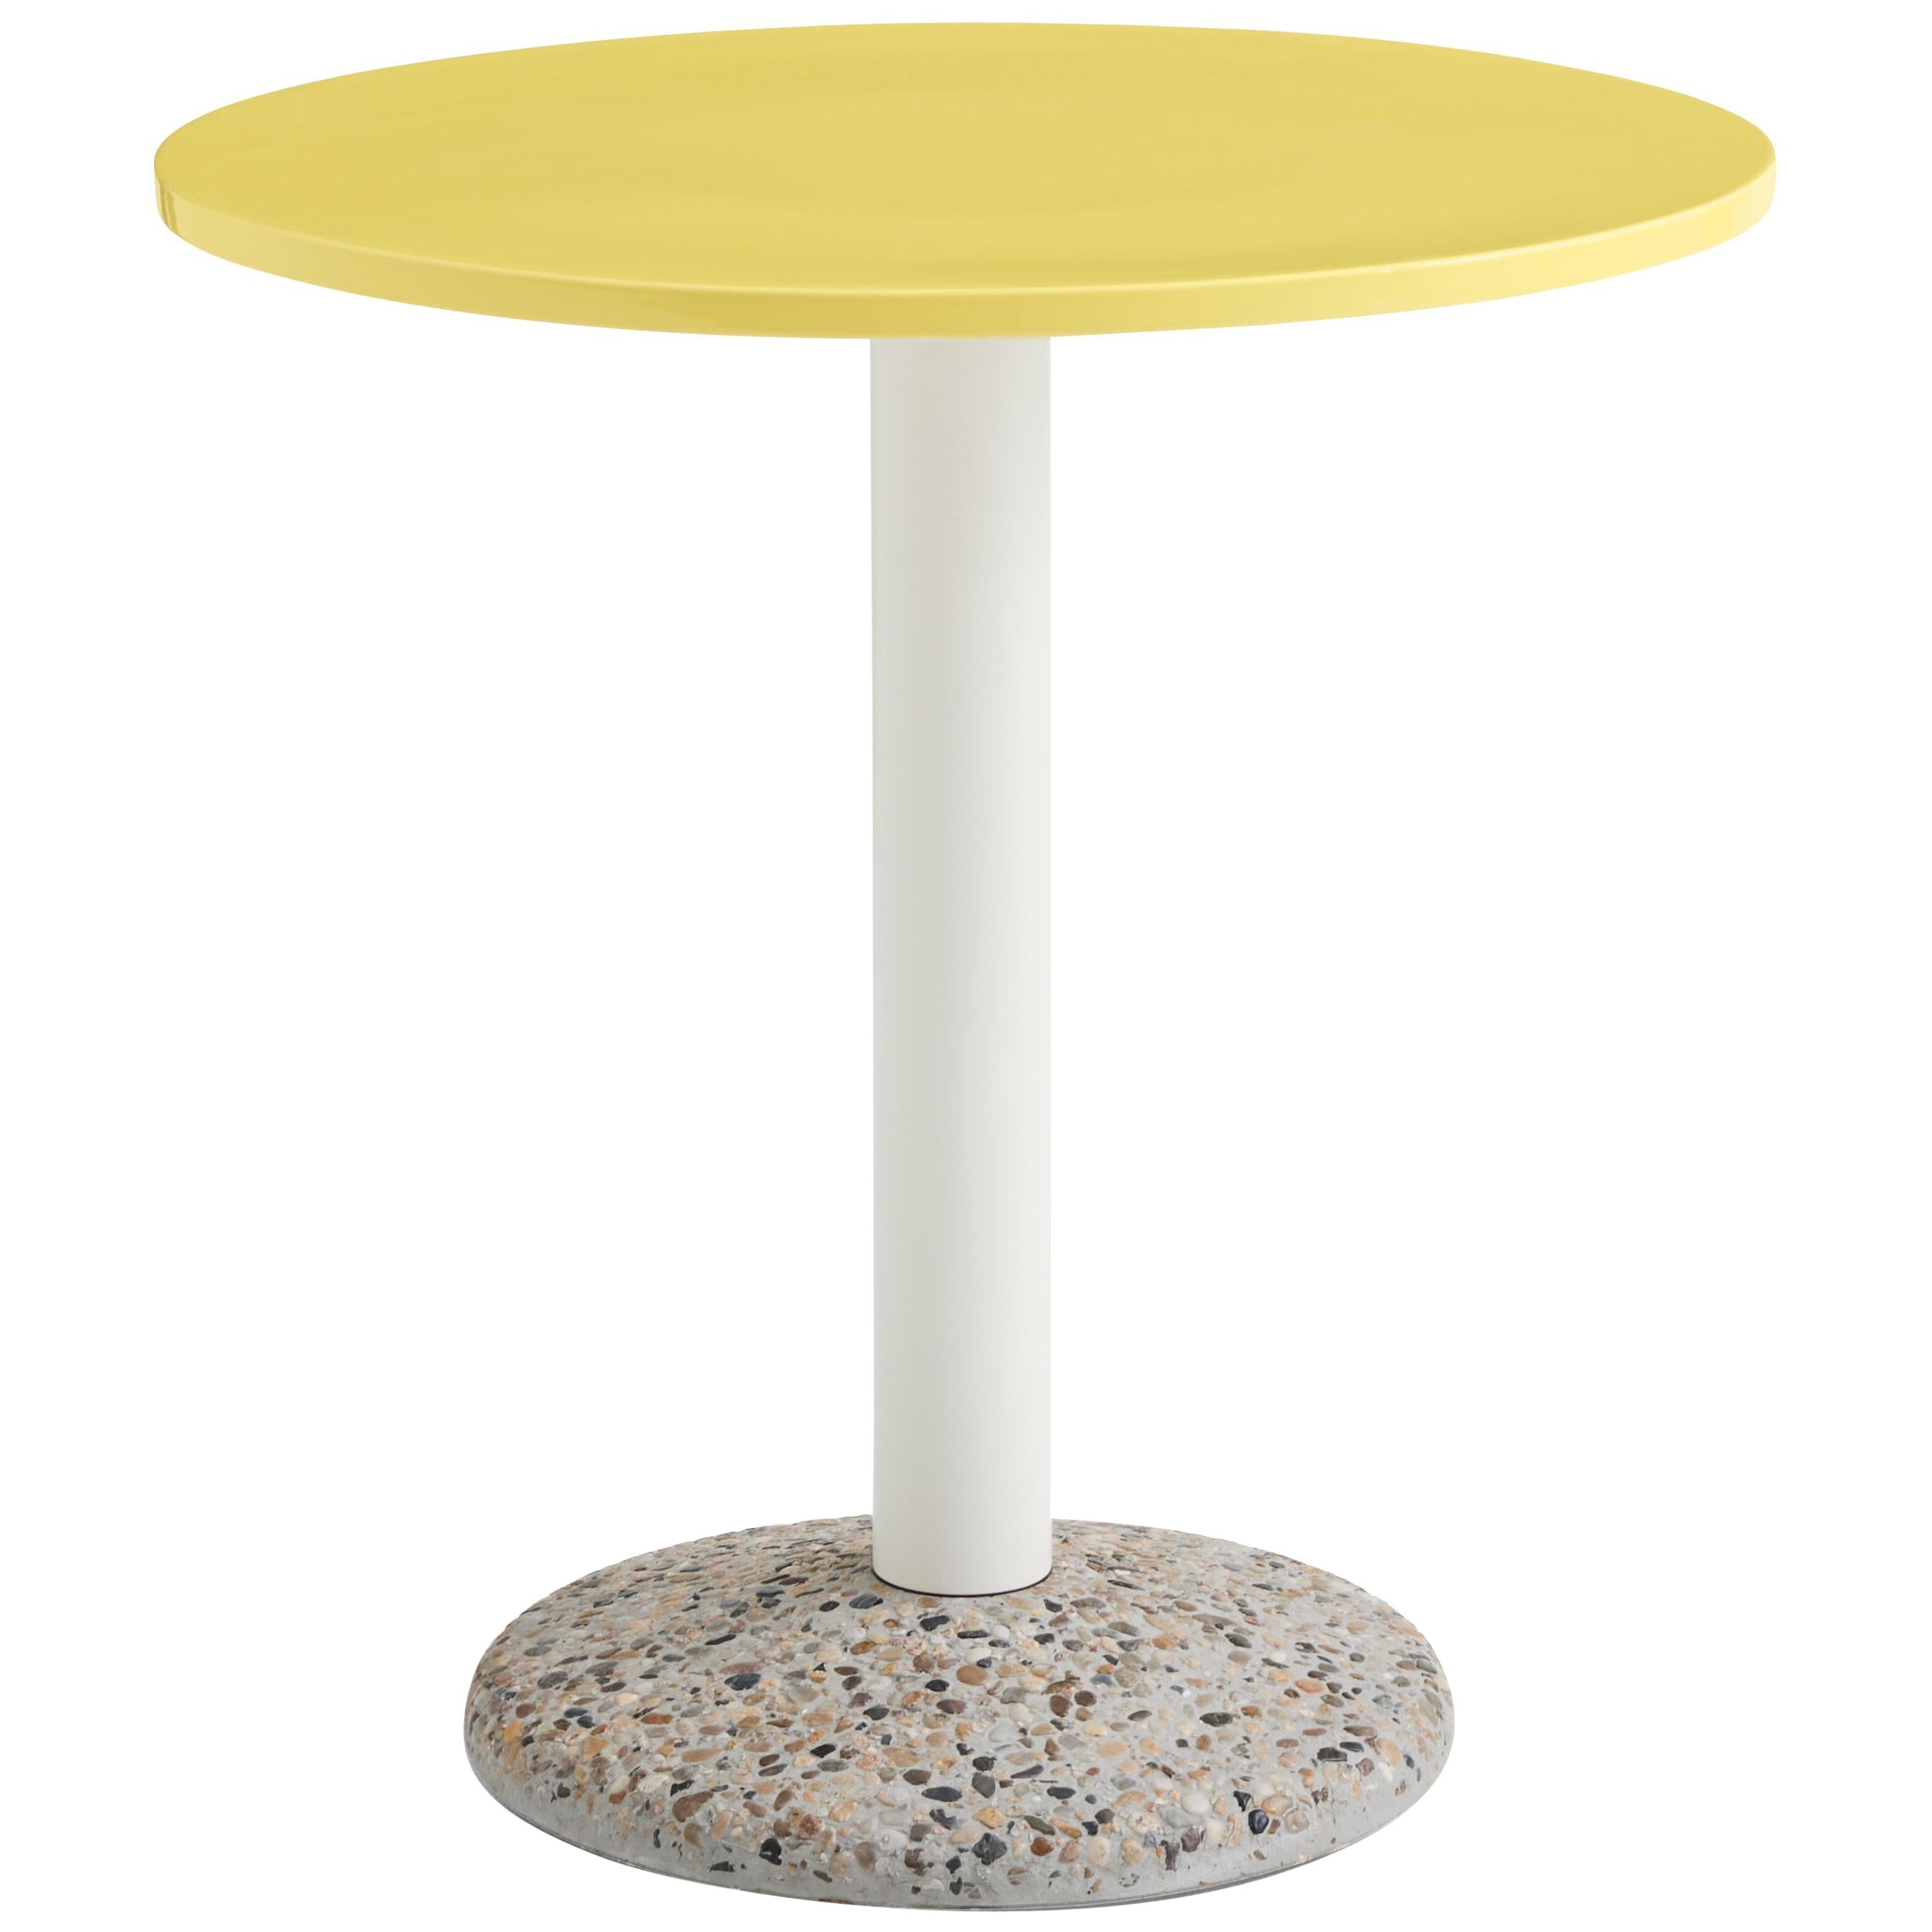 Ceramic Table Ø70, Outdoor-Bright Yellow Porcelain-by Muller Van Severen for Hay